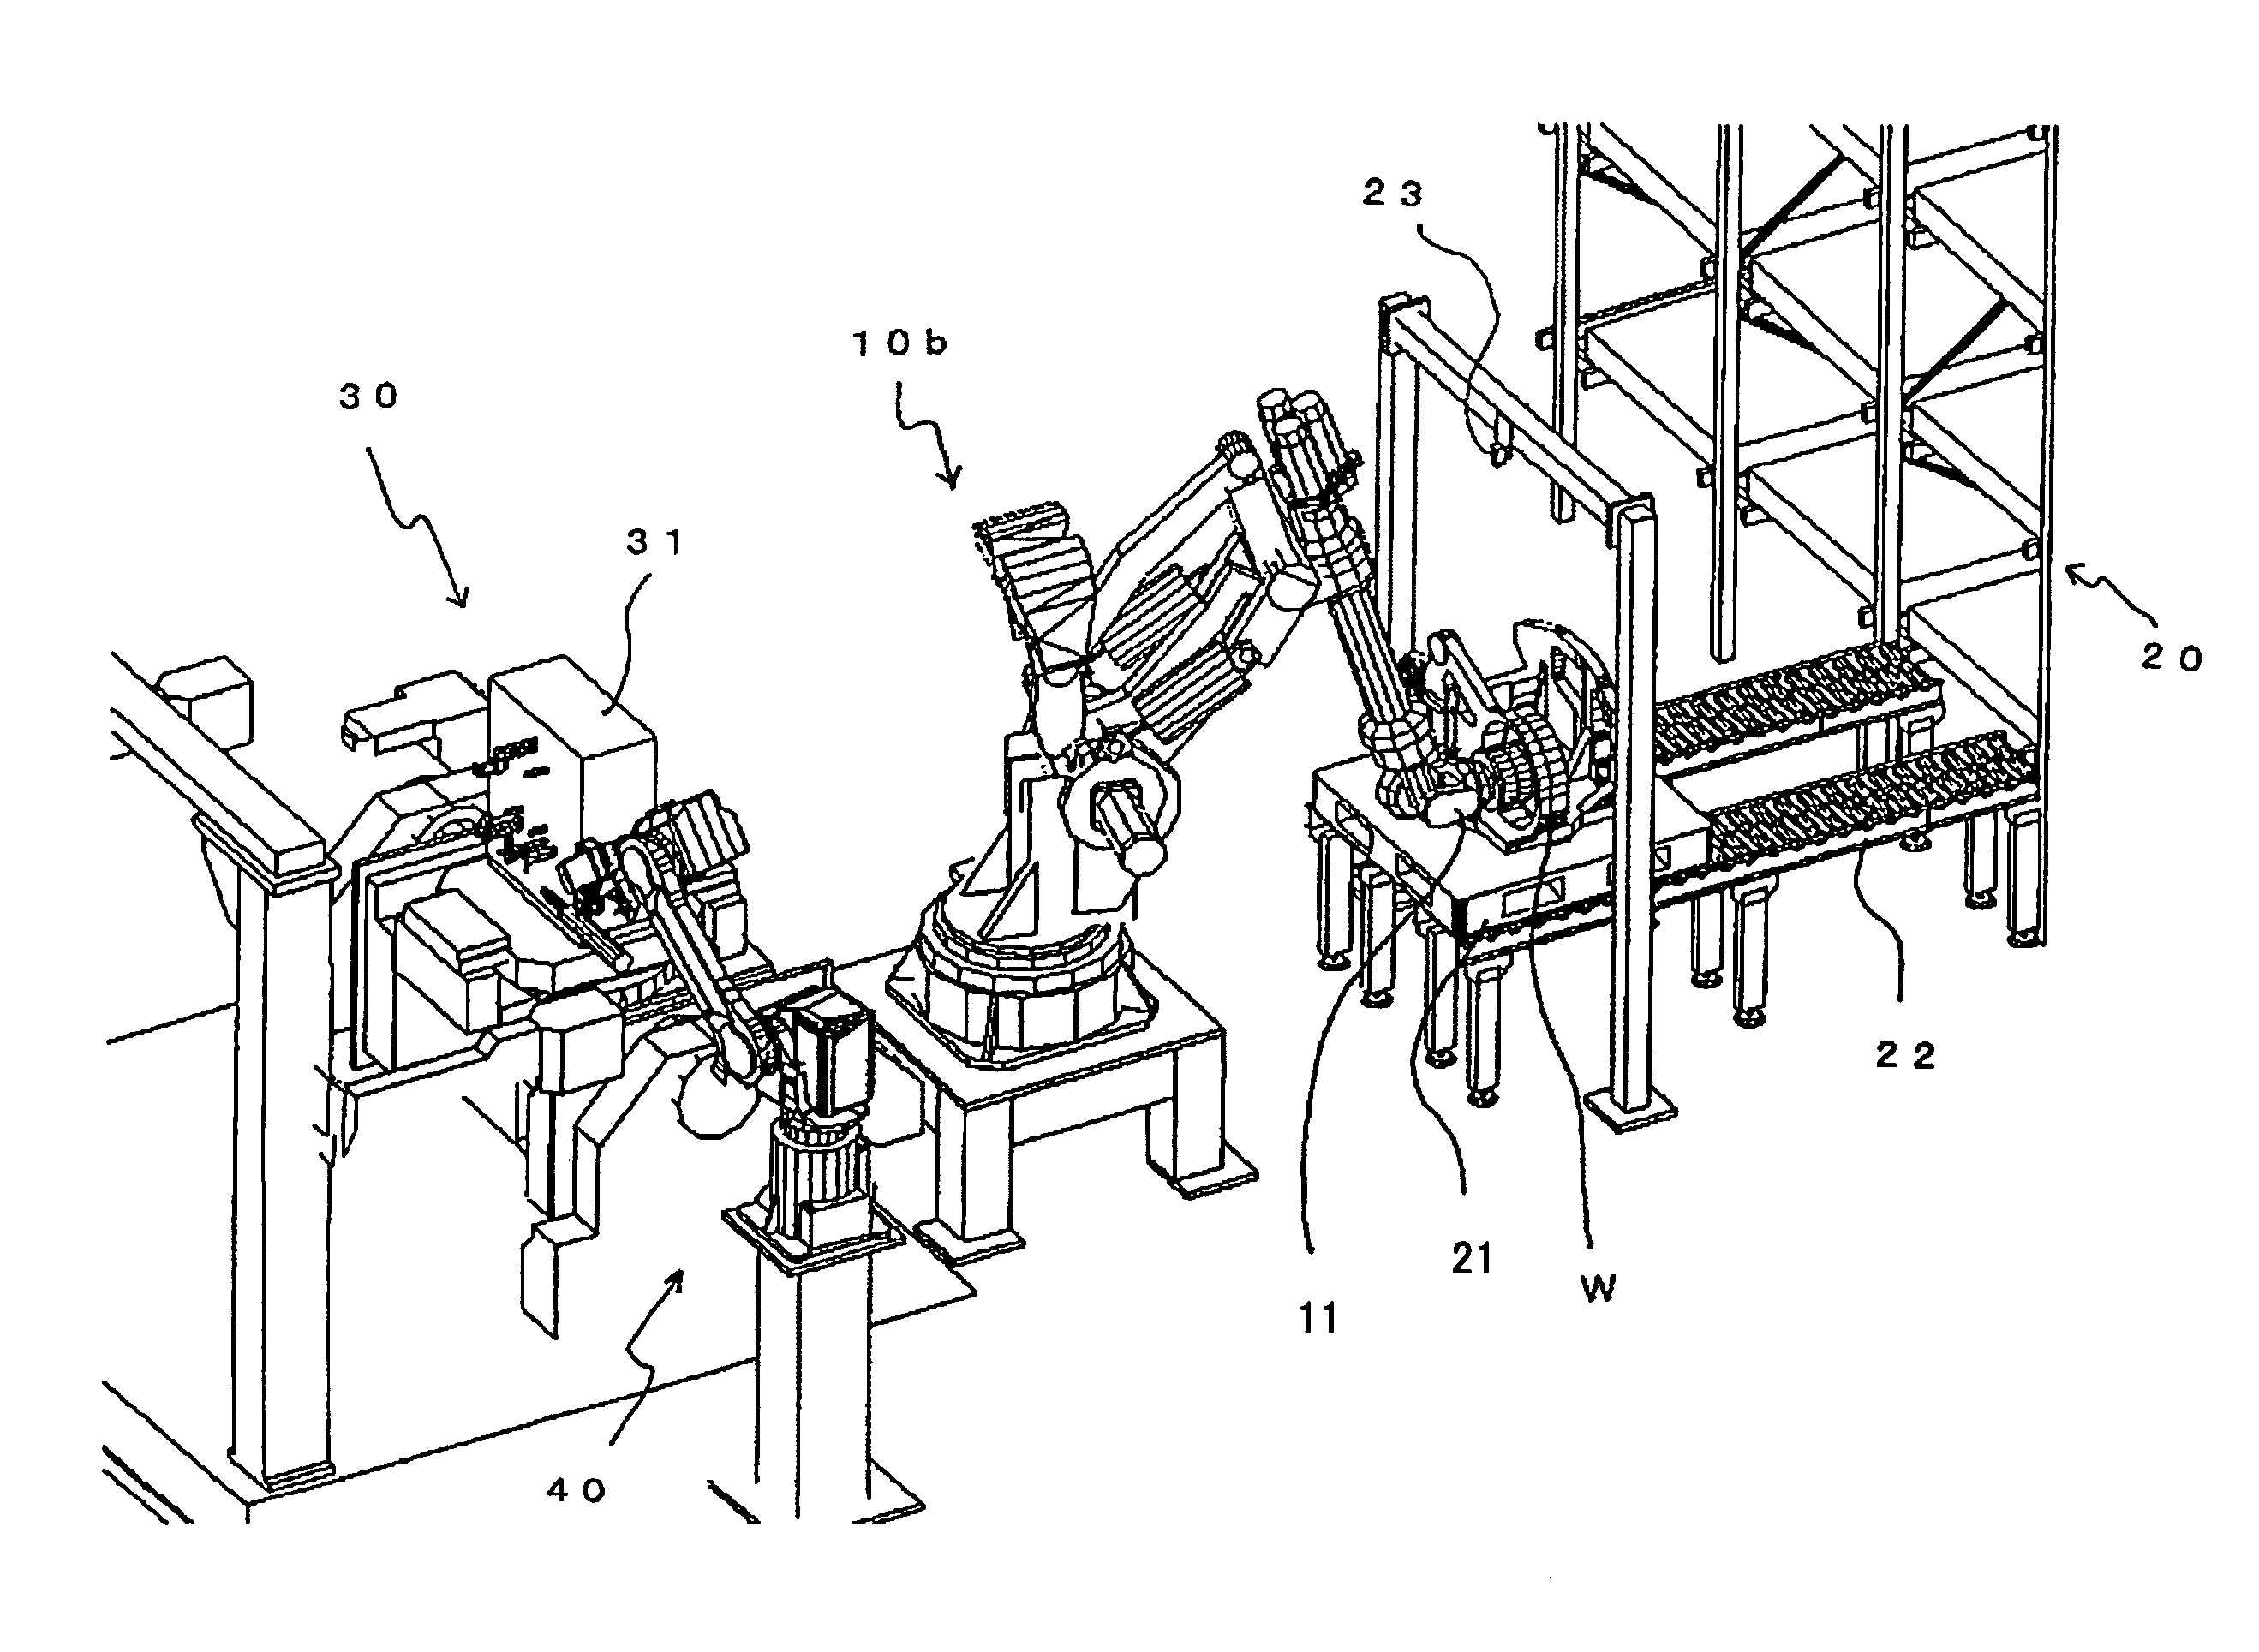 Object handling apparatus